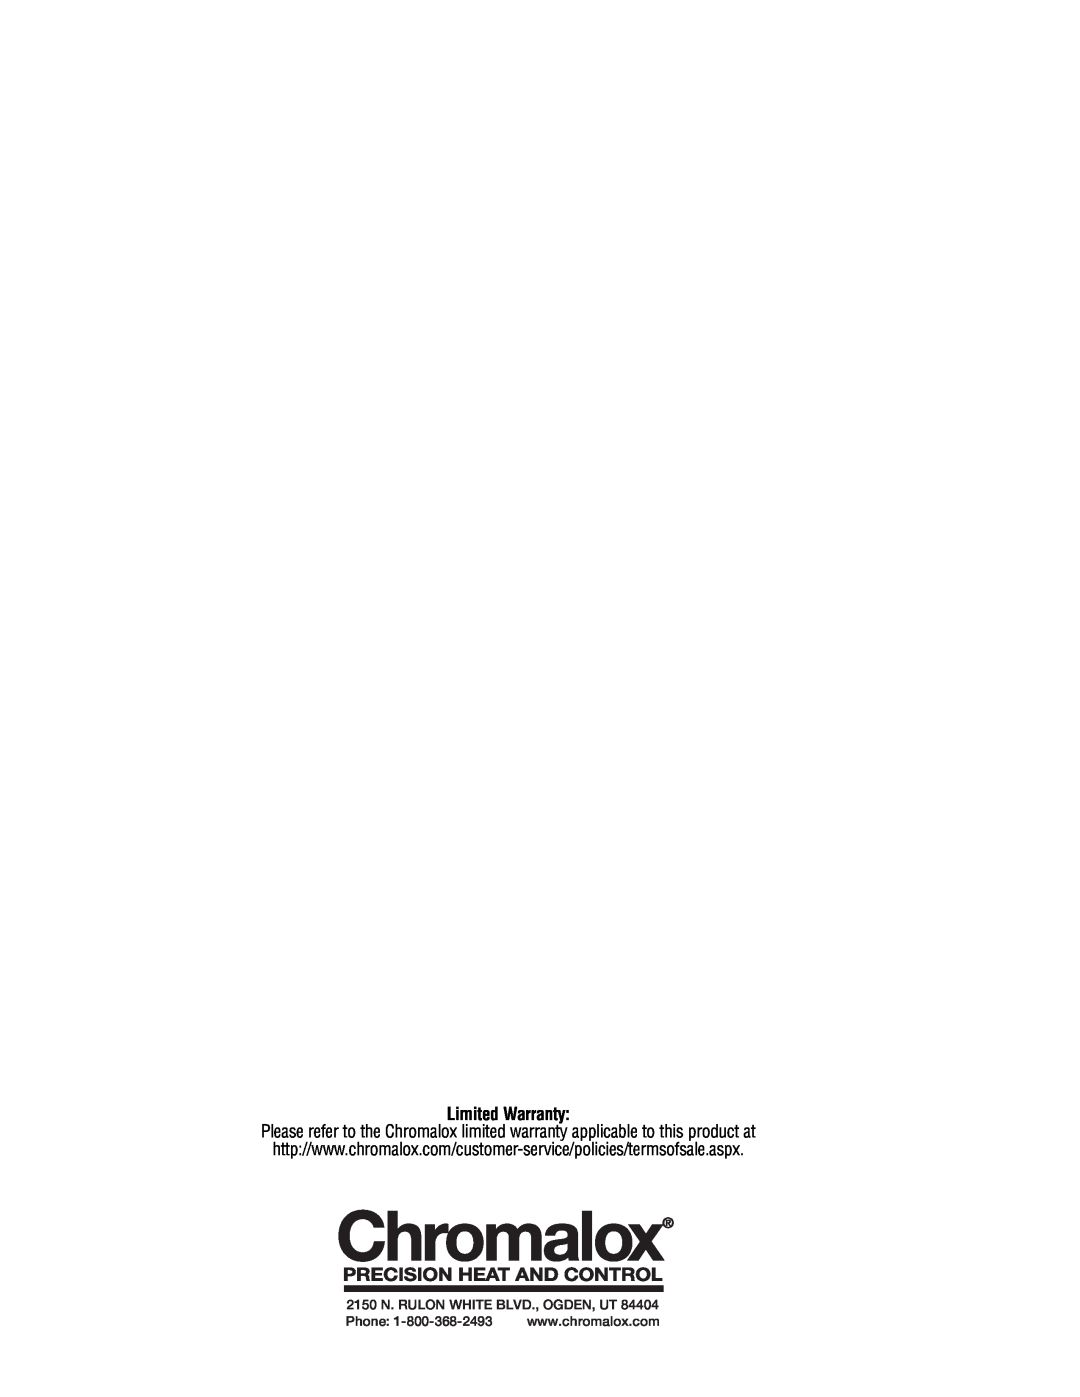 Chromalox PF479-6 dimensions Limited Warranty, 2150 N. RULON WHITE BLVD., OGDEN, UT, Phone 